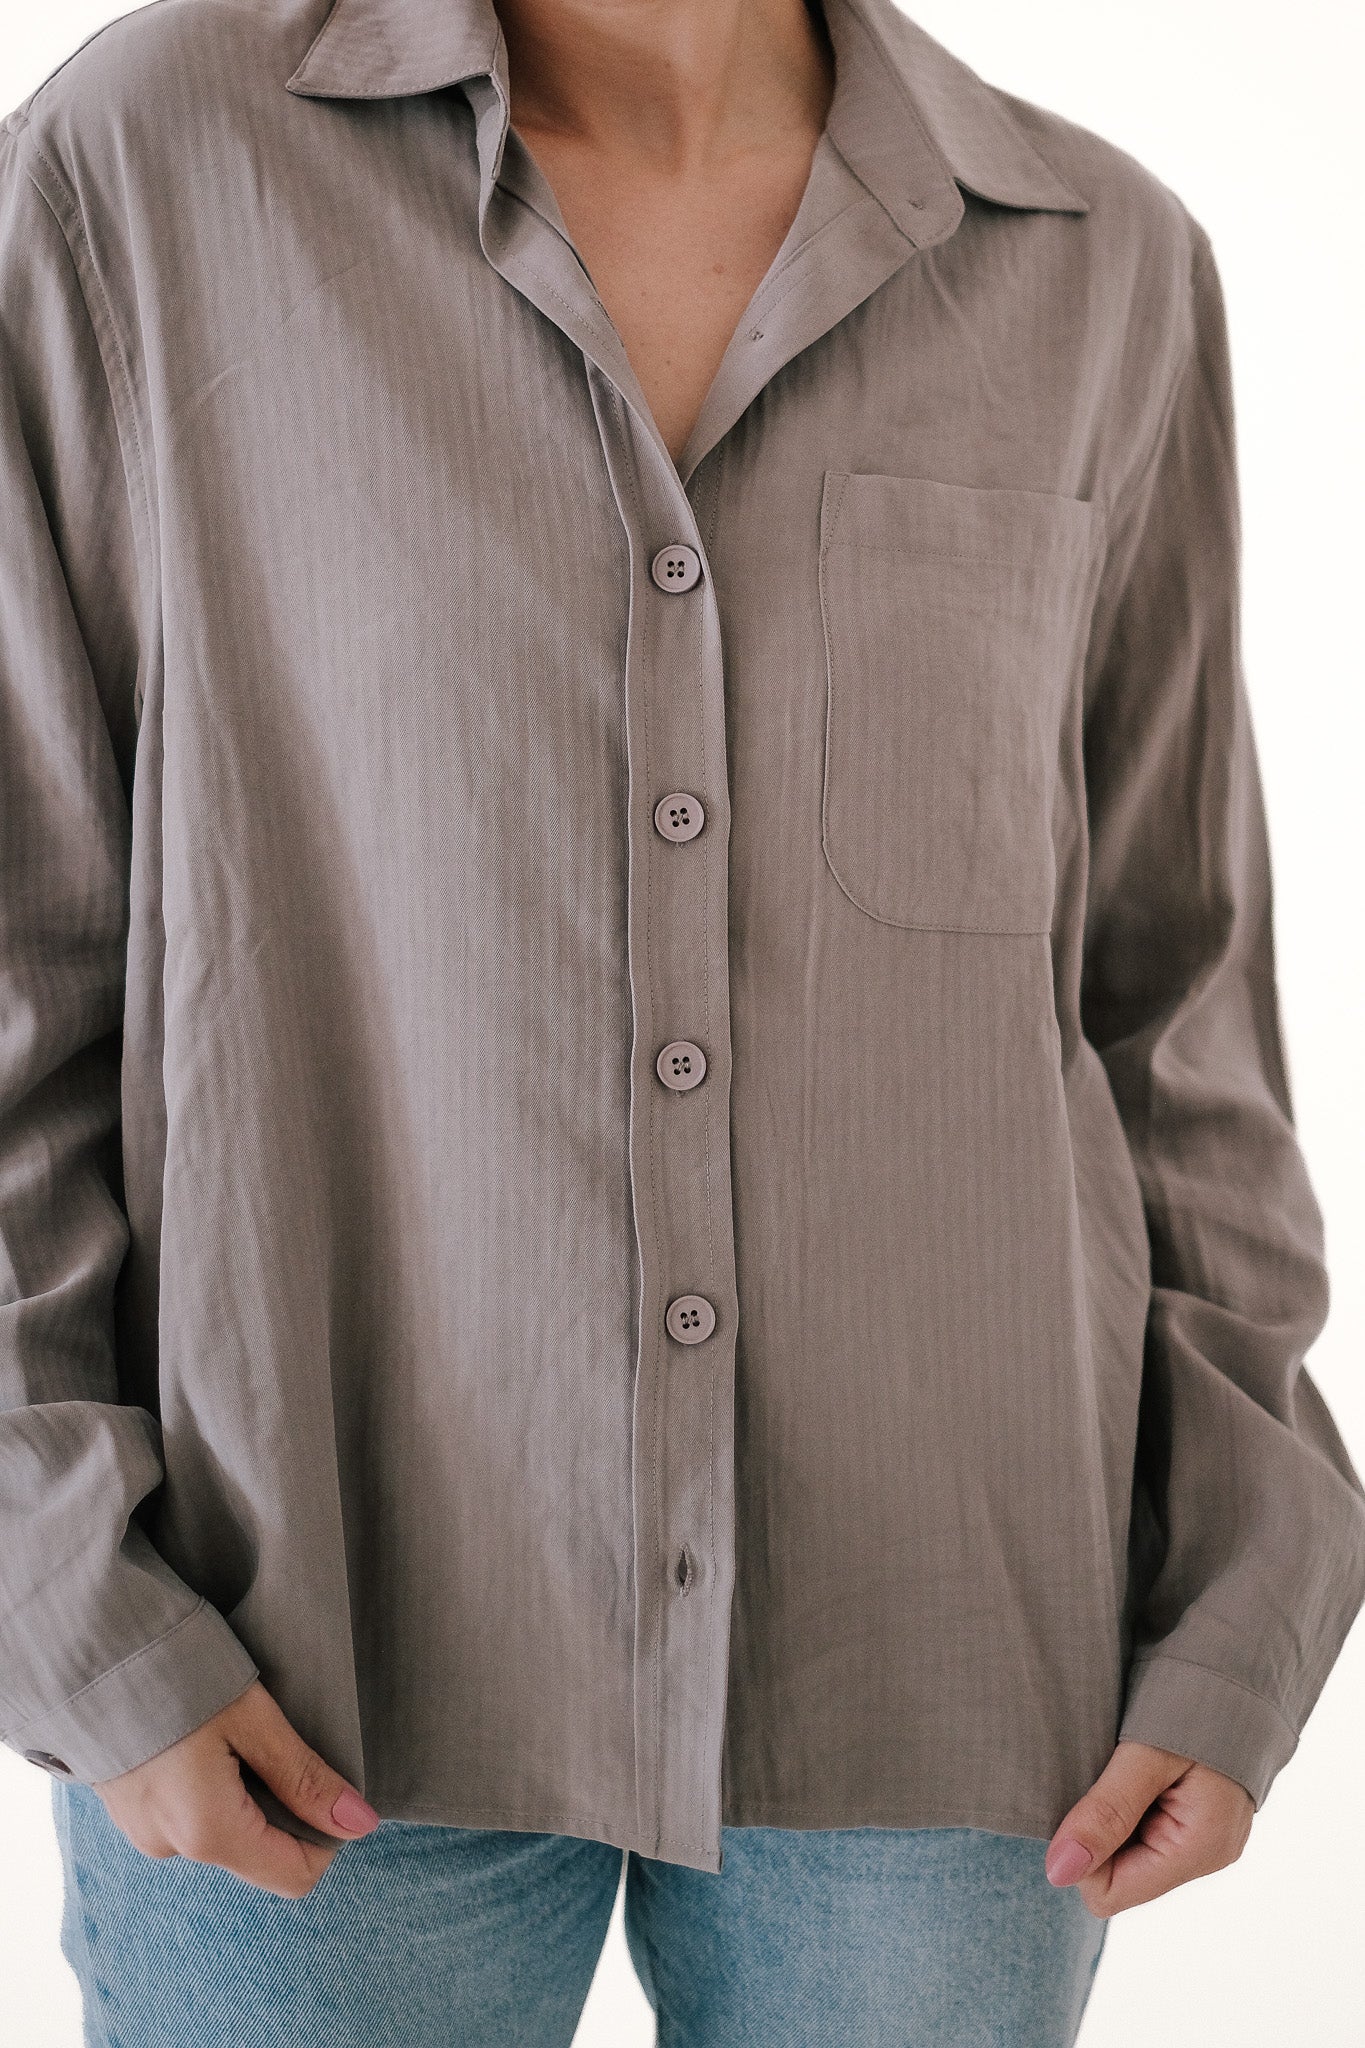 Sawyer Taupe Soft Stripe Collared Button Down Shirt (M)